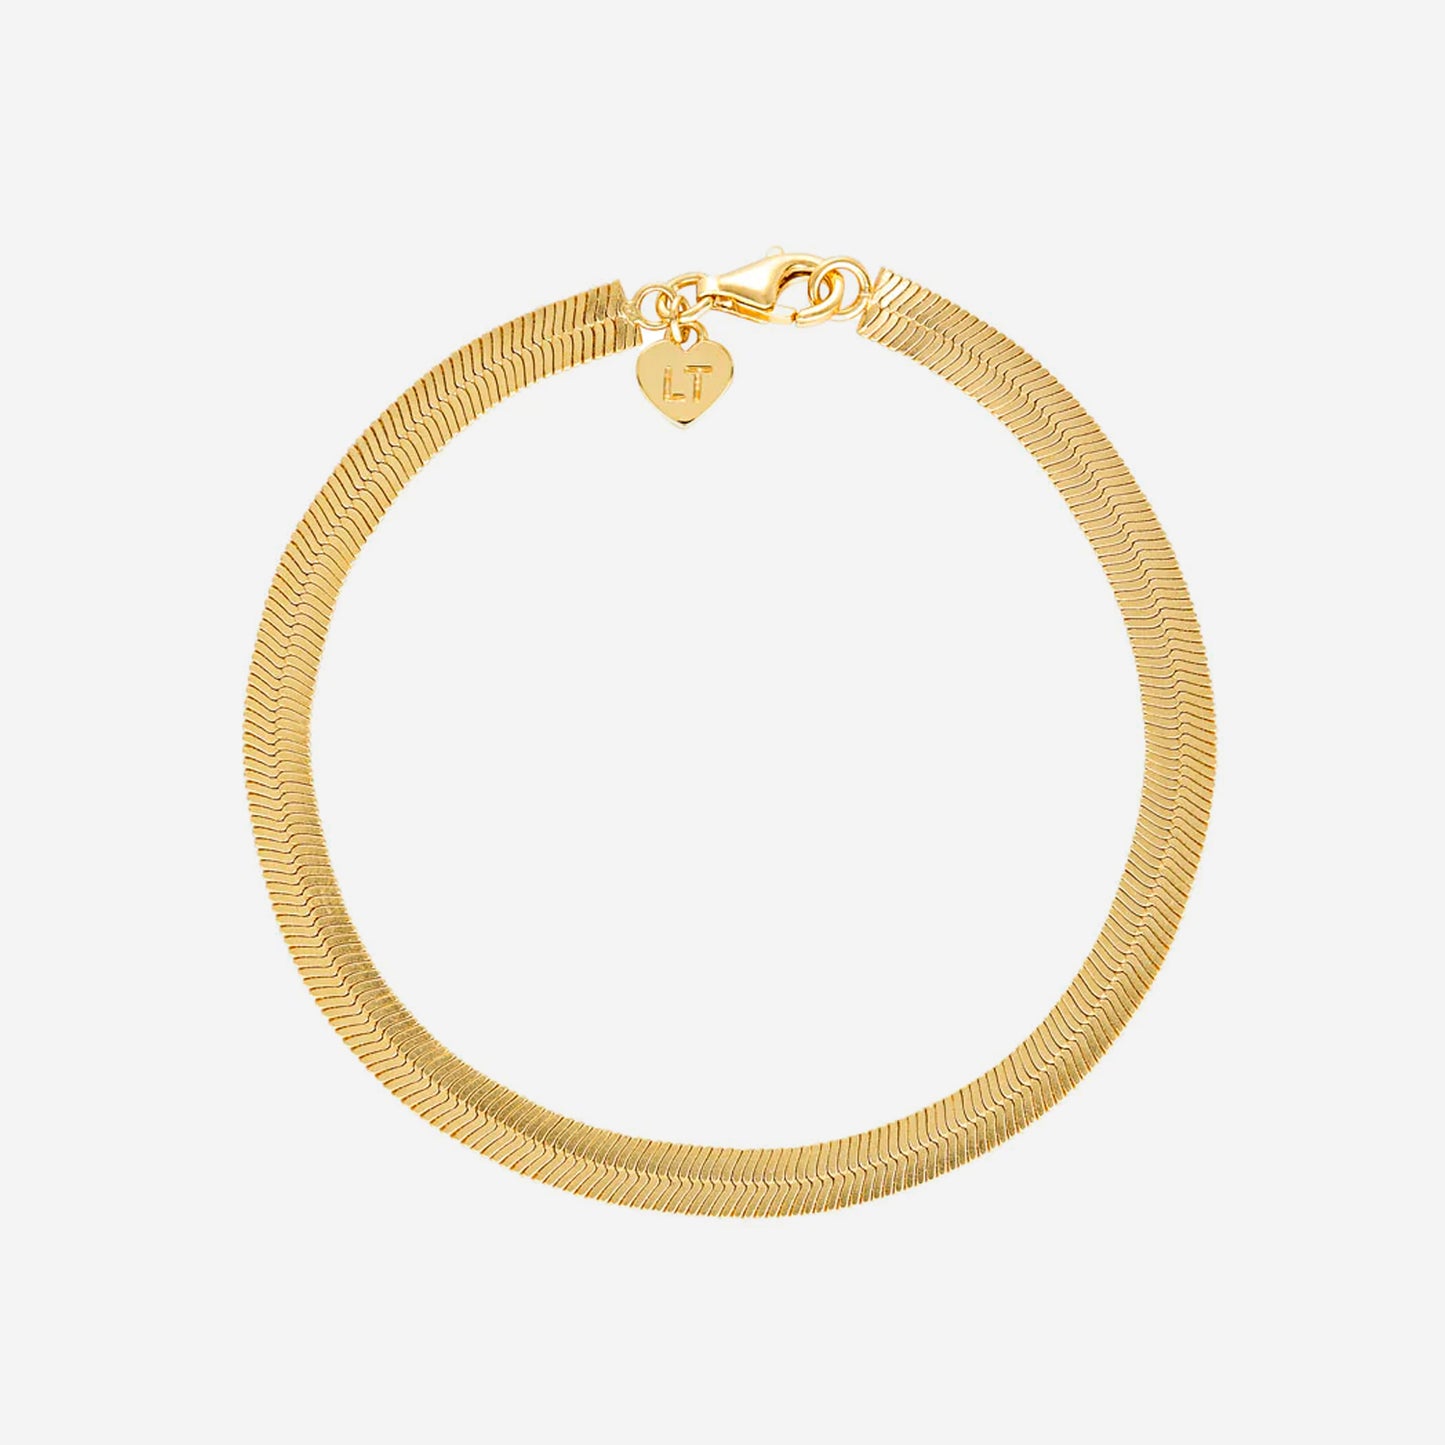 Linda Tahija - Herringbone Chain Bracelet - Gold Plated